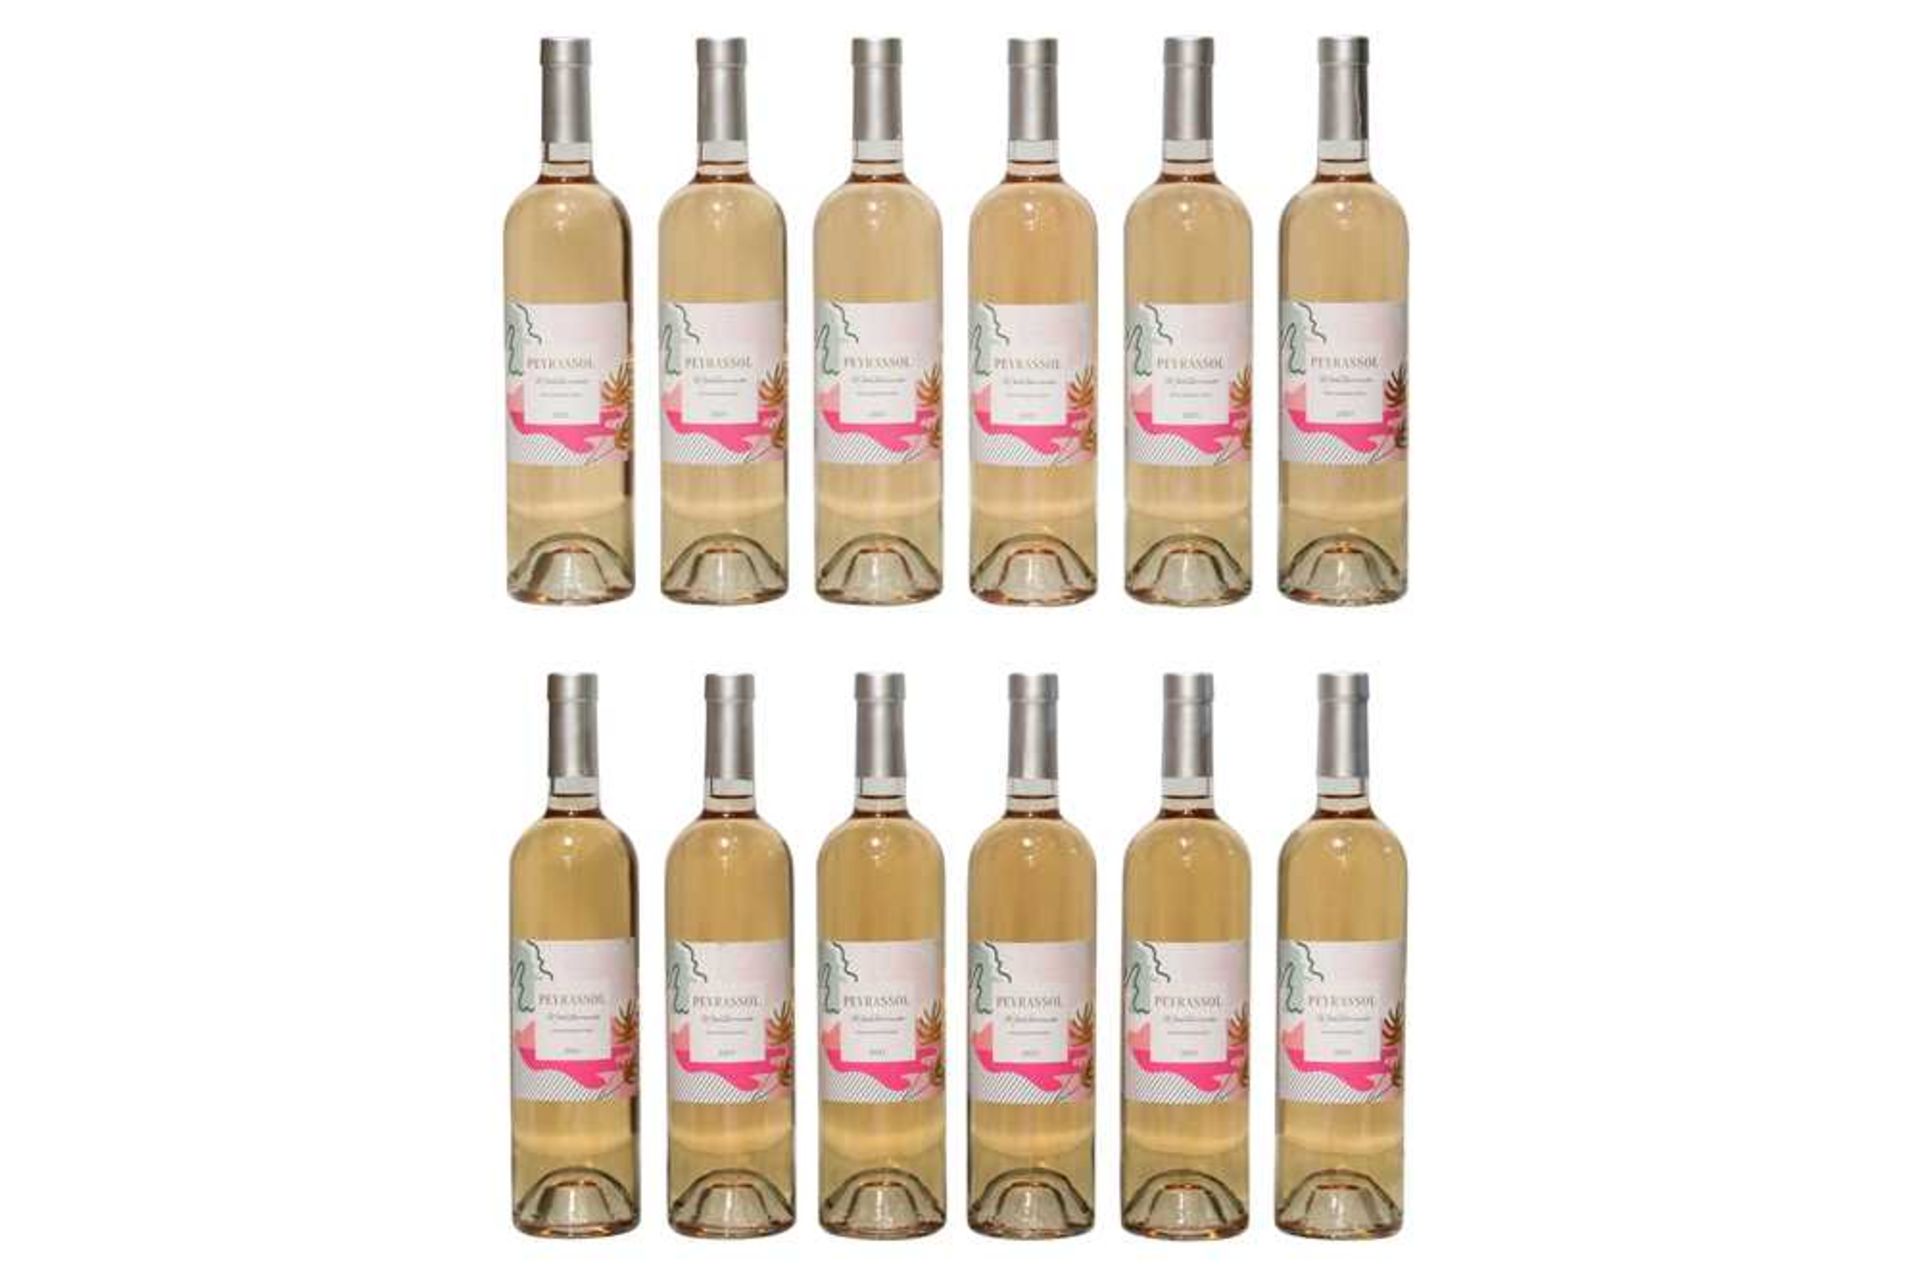 Peyrassol, Méditerranée IGP, 2021, twelve bottles